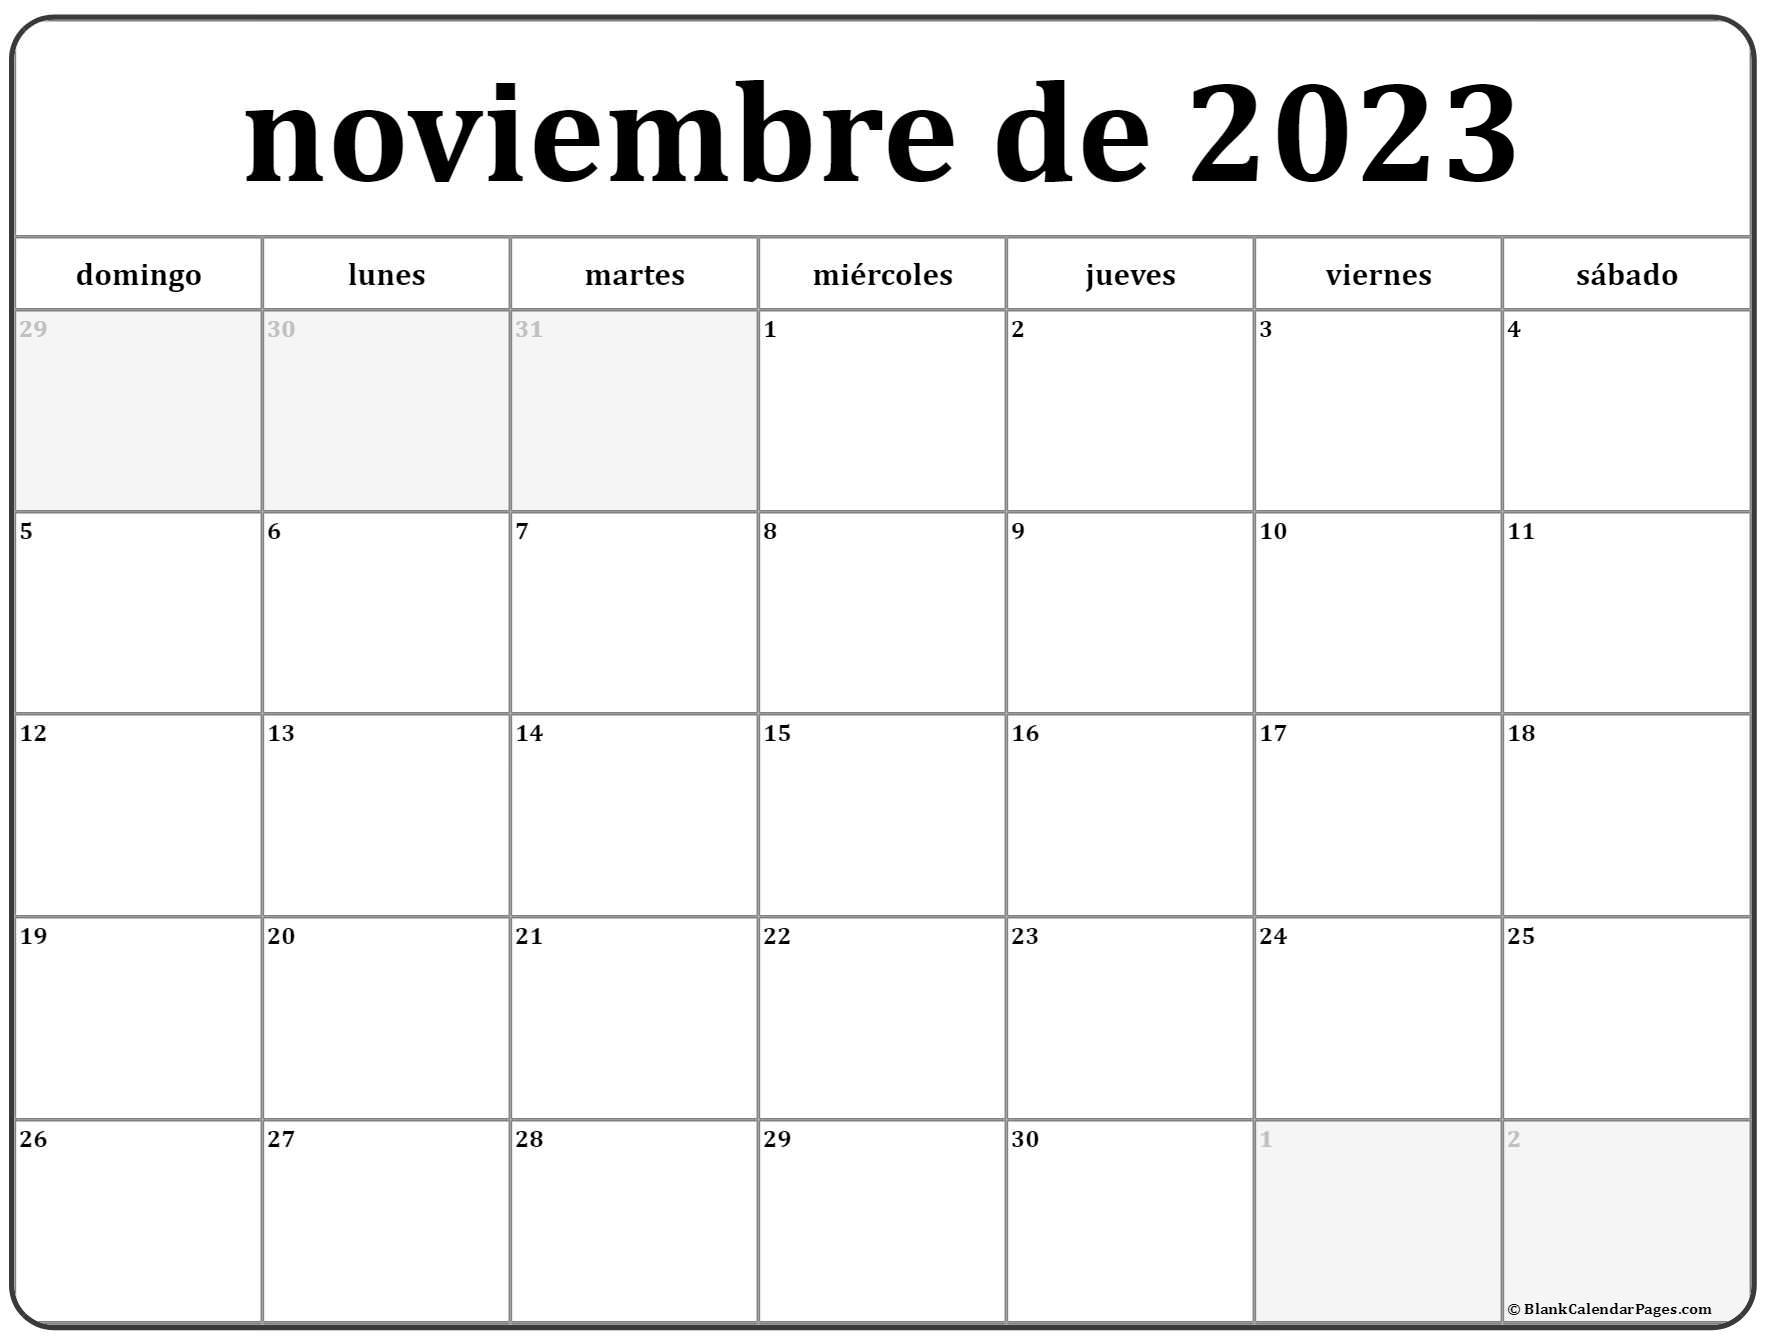 november-and-december-2022-calendar-calendar-options-november-and